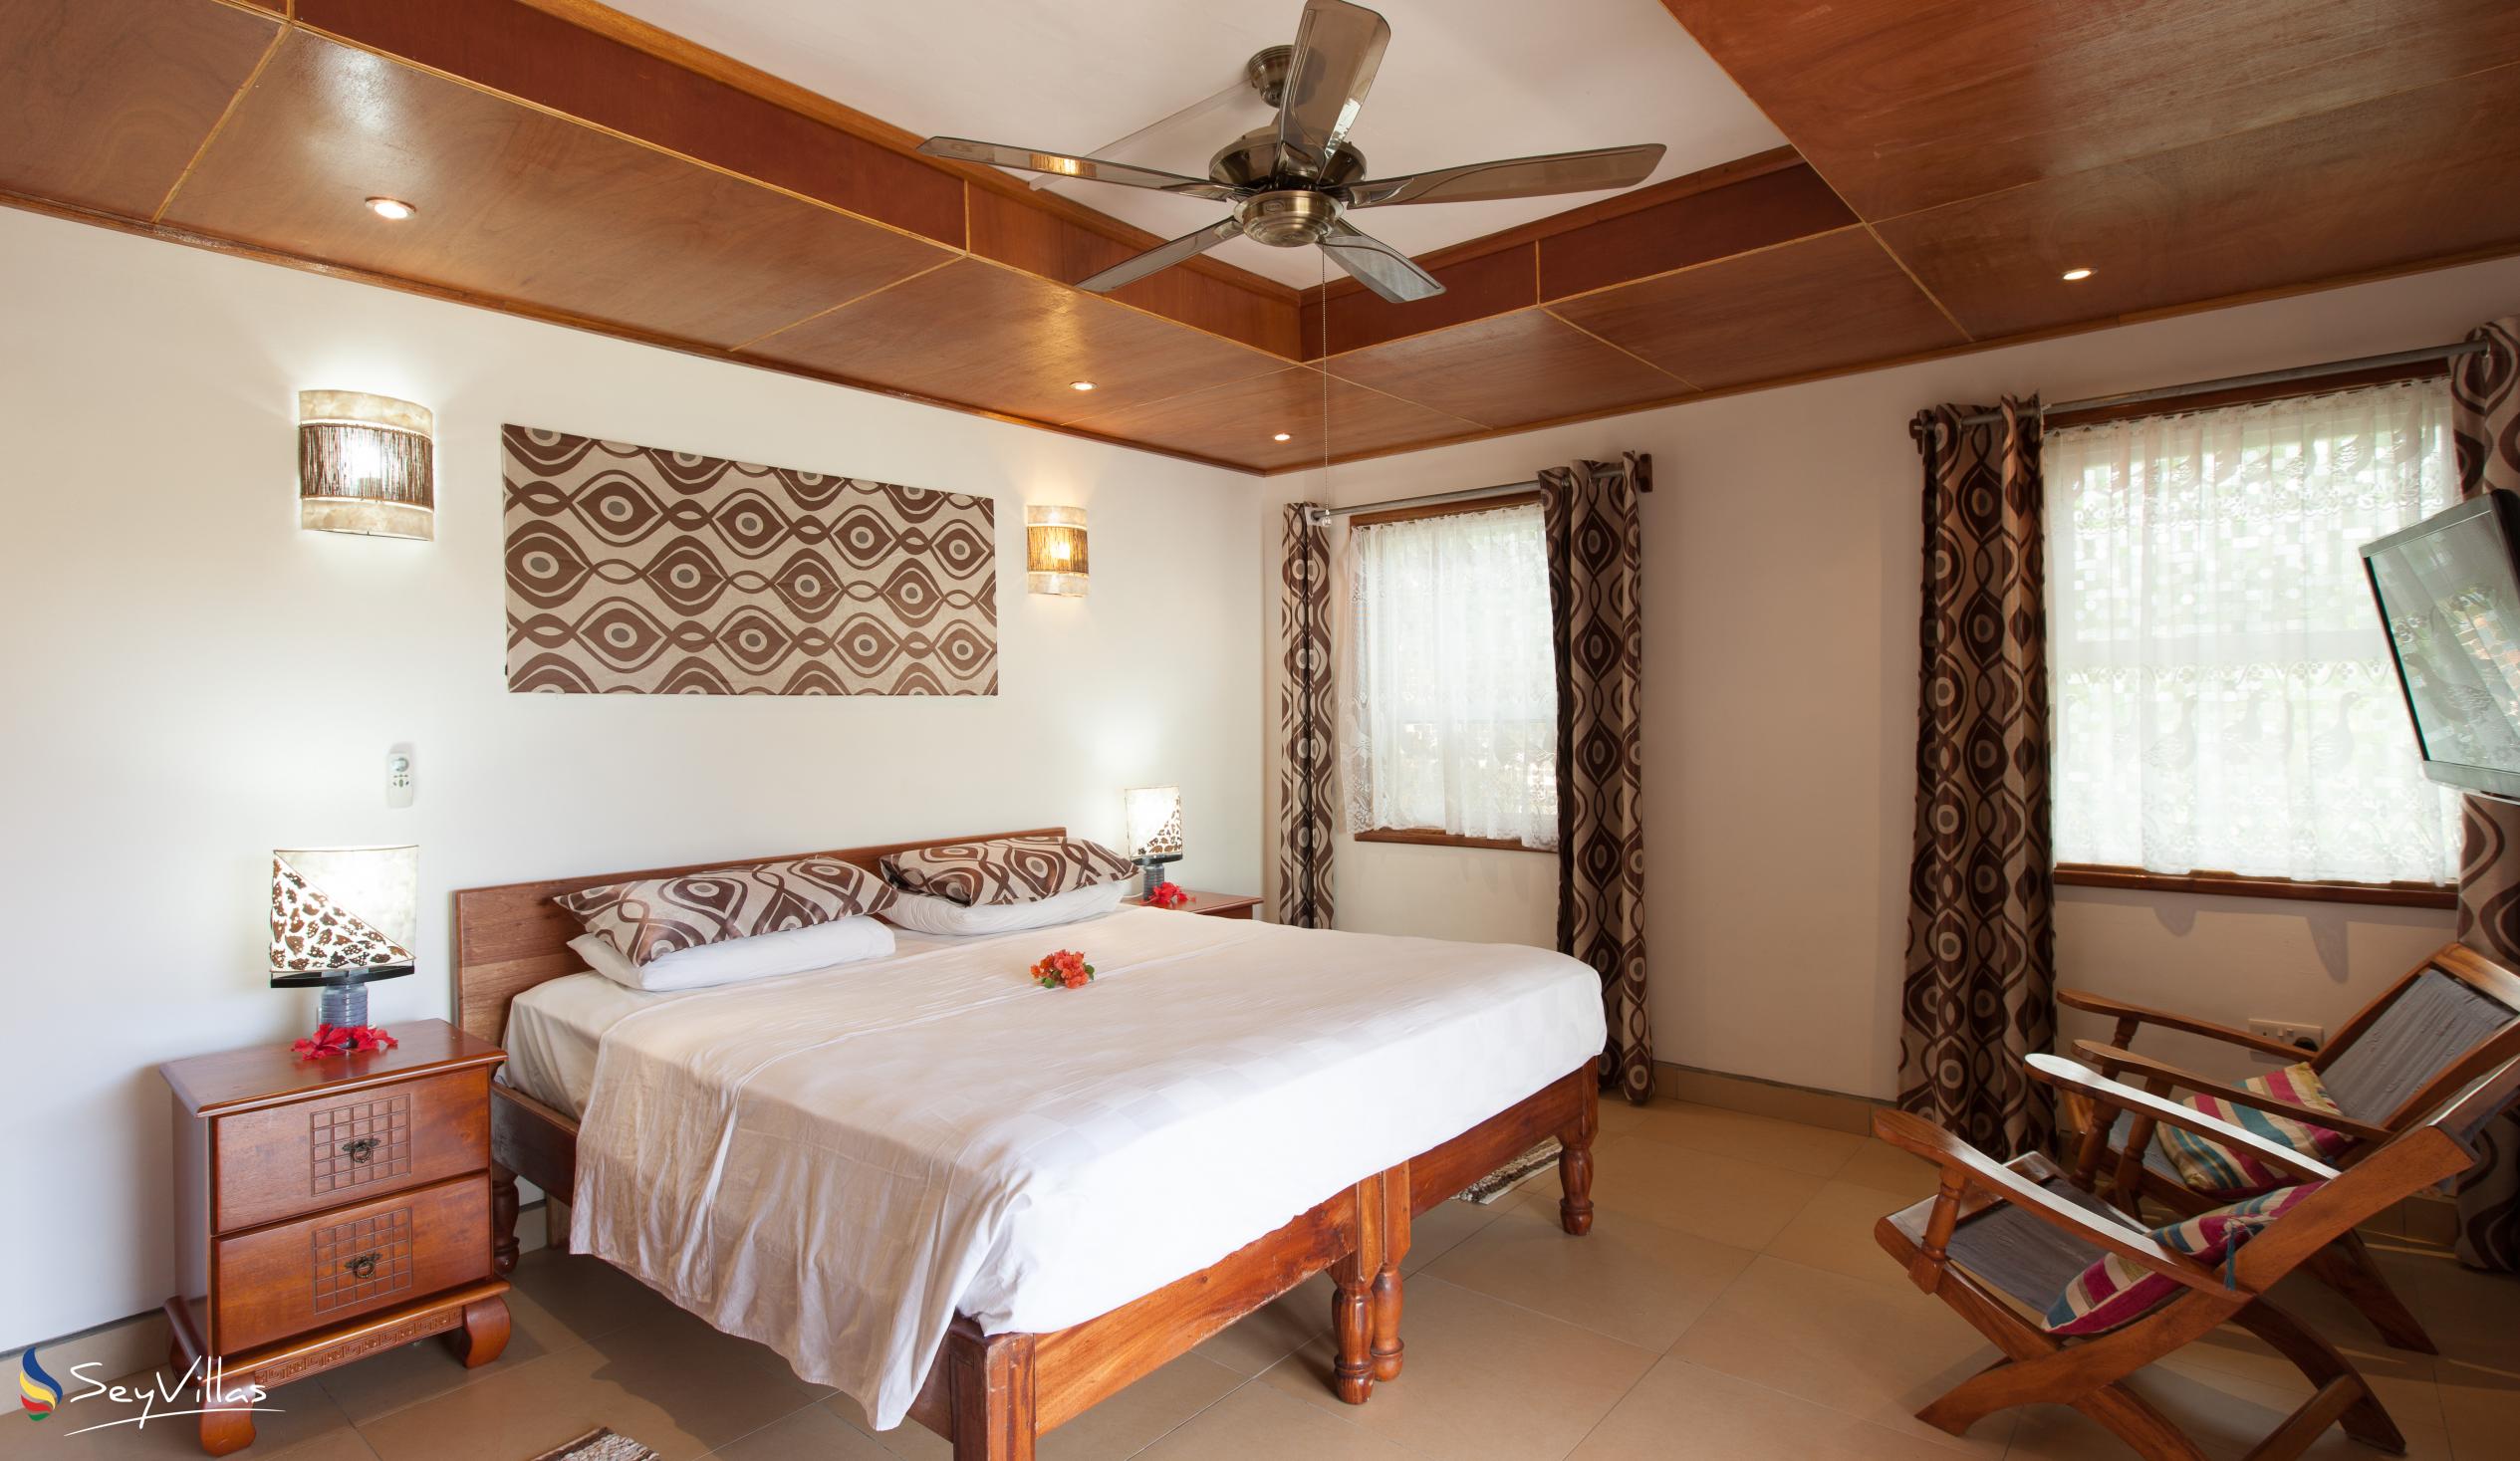 Foto 101: Sea View Lodge - Villetta su palafitte - Praslin (Seychelles)